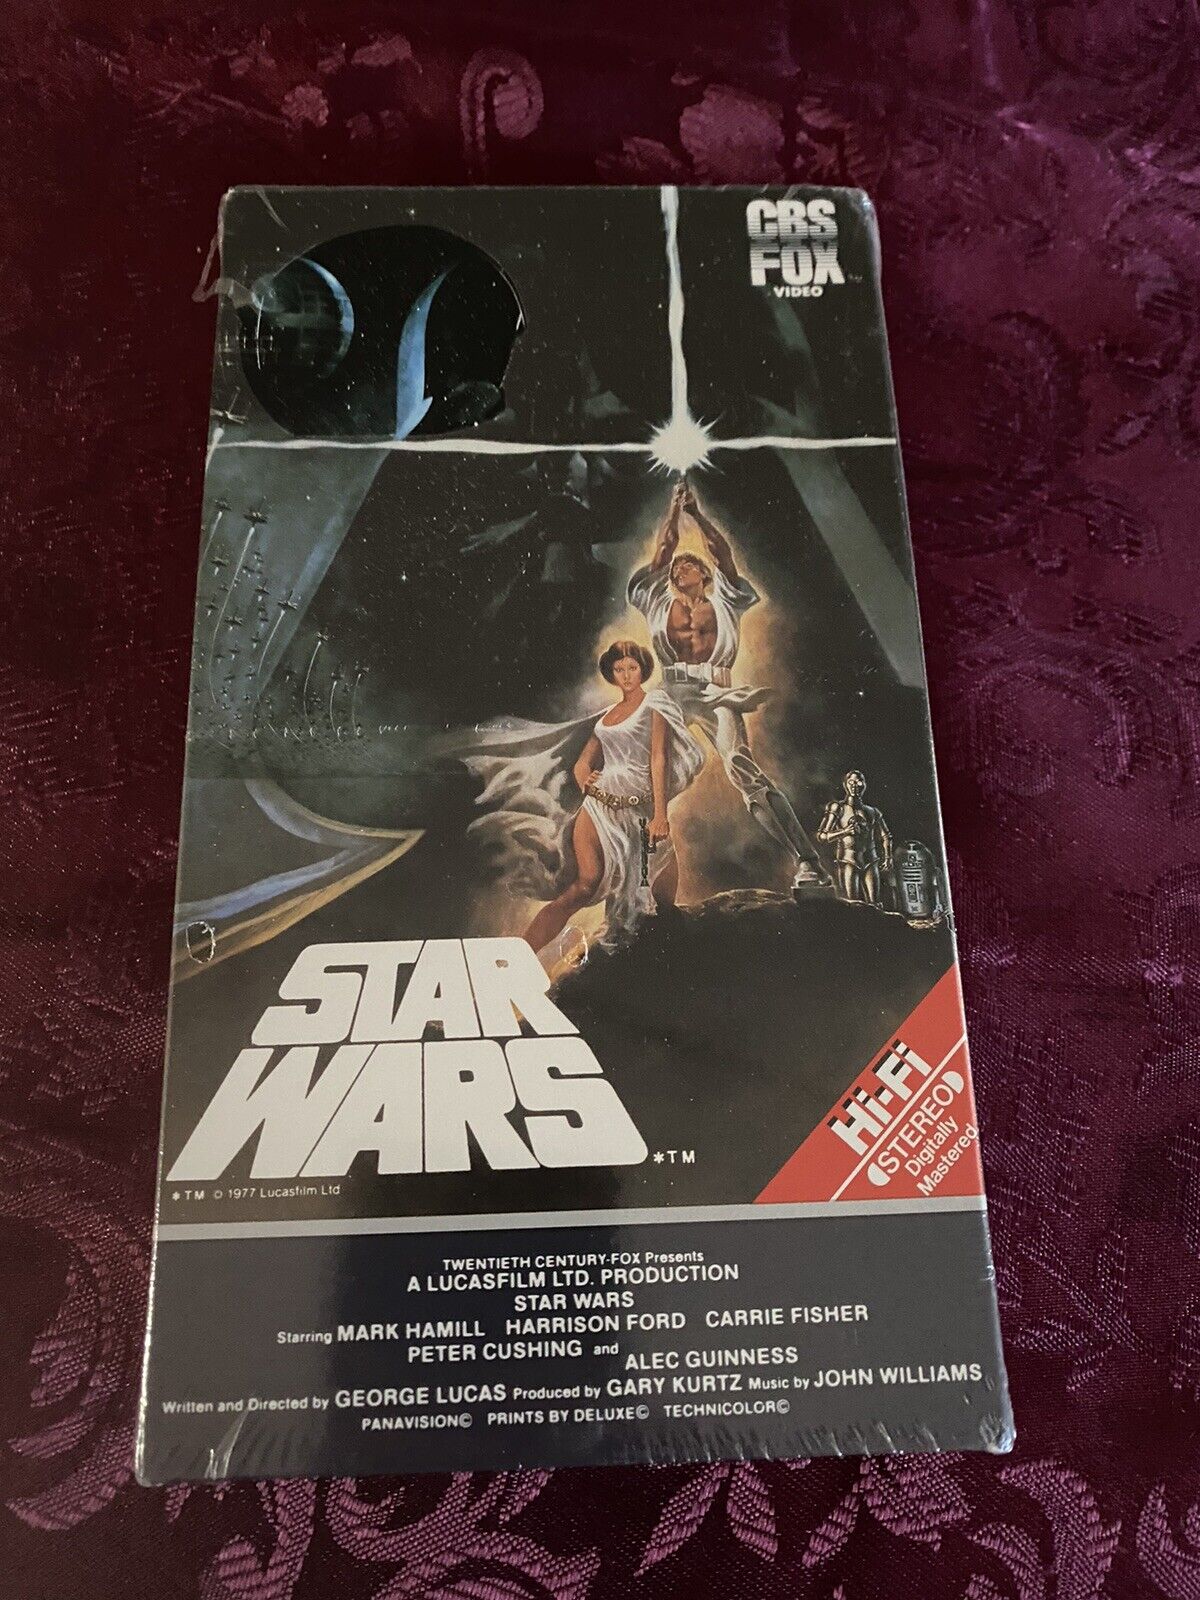 1984 VHS Star Wars Red Label WhiteBack CBS Fox Watermark SEALED -Sticker Cut Out